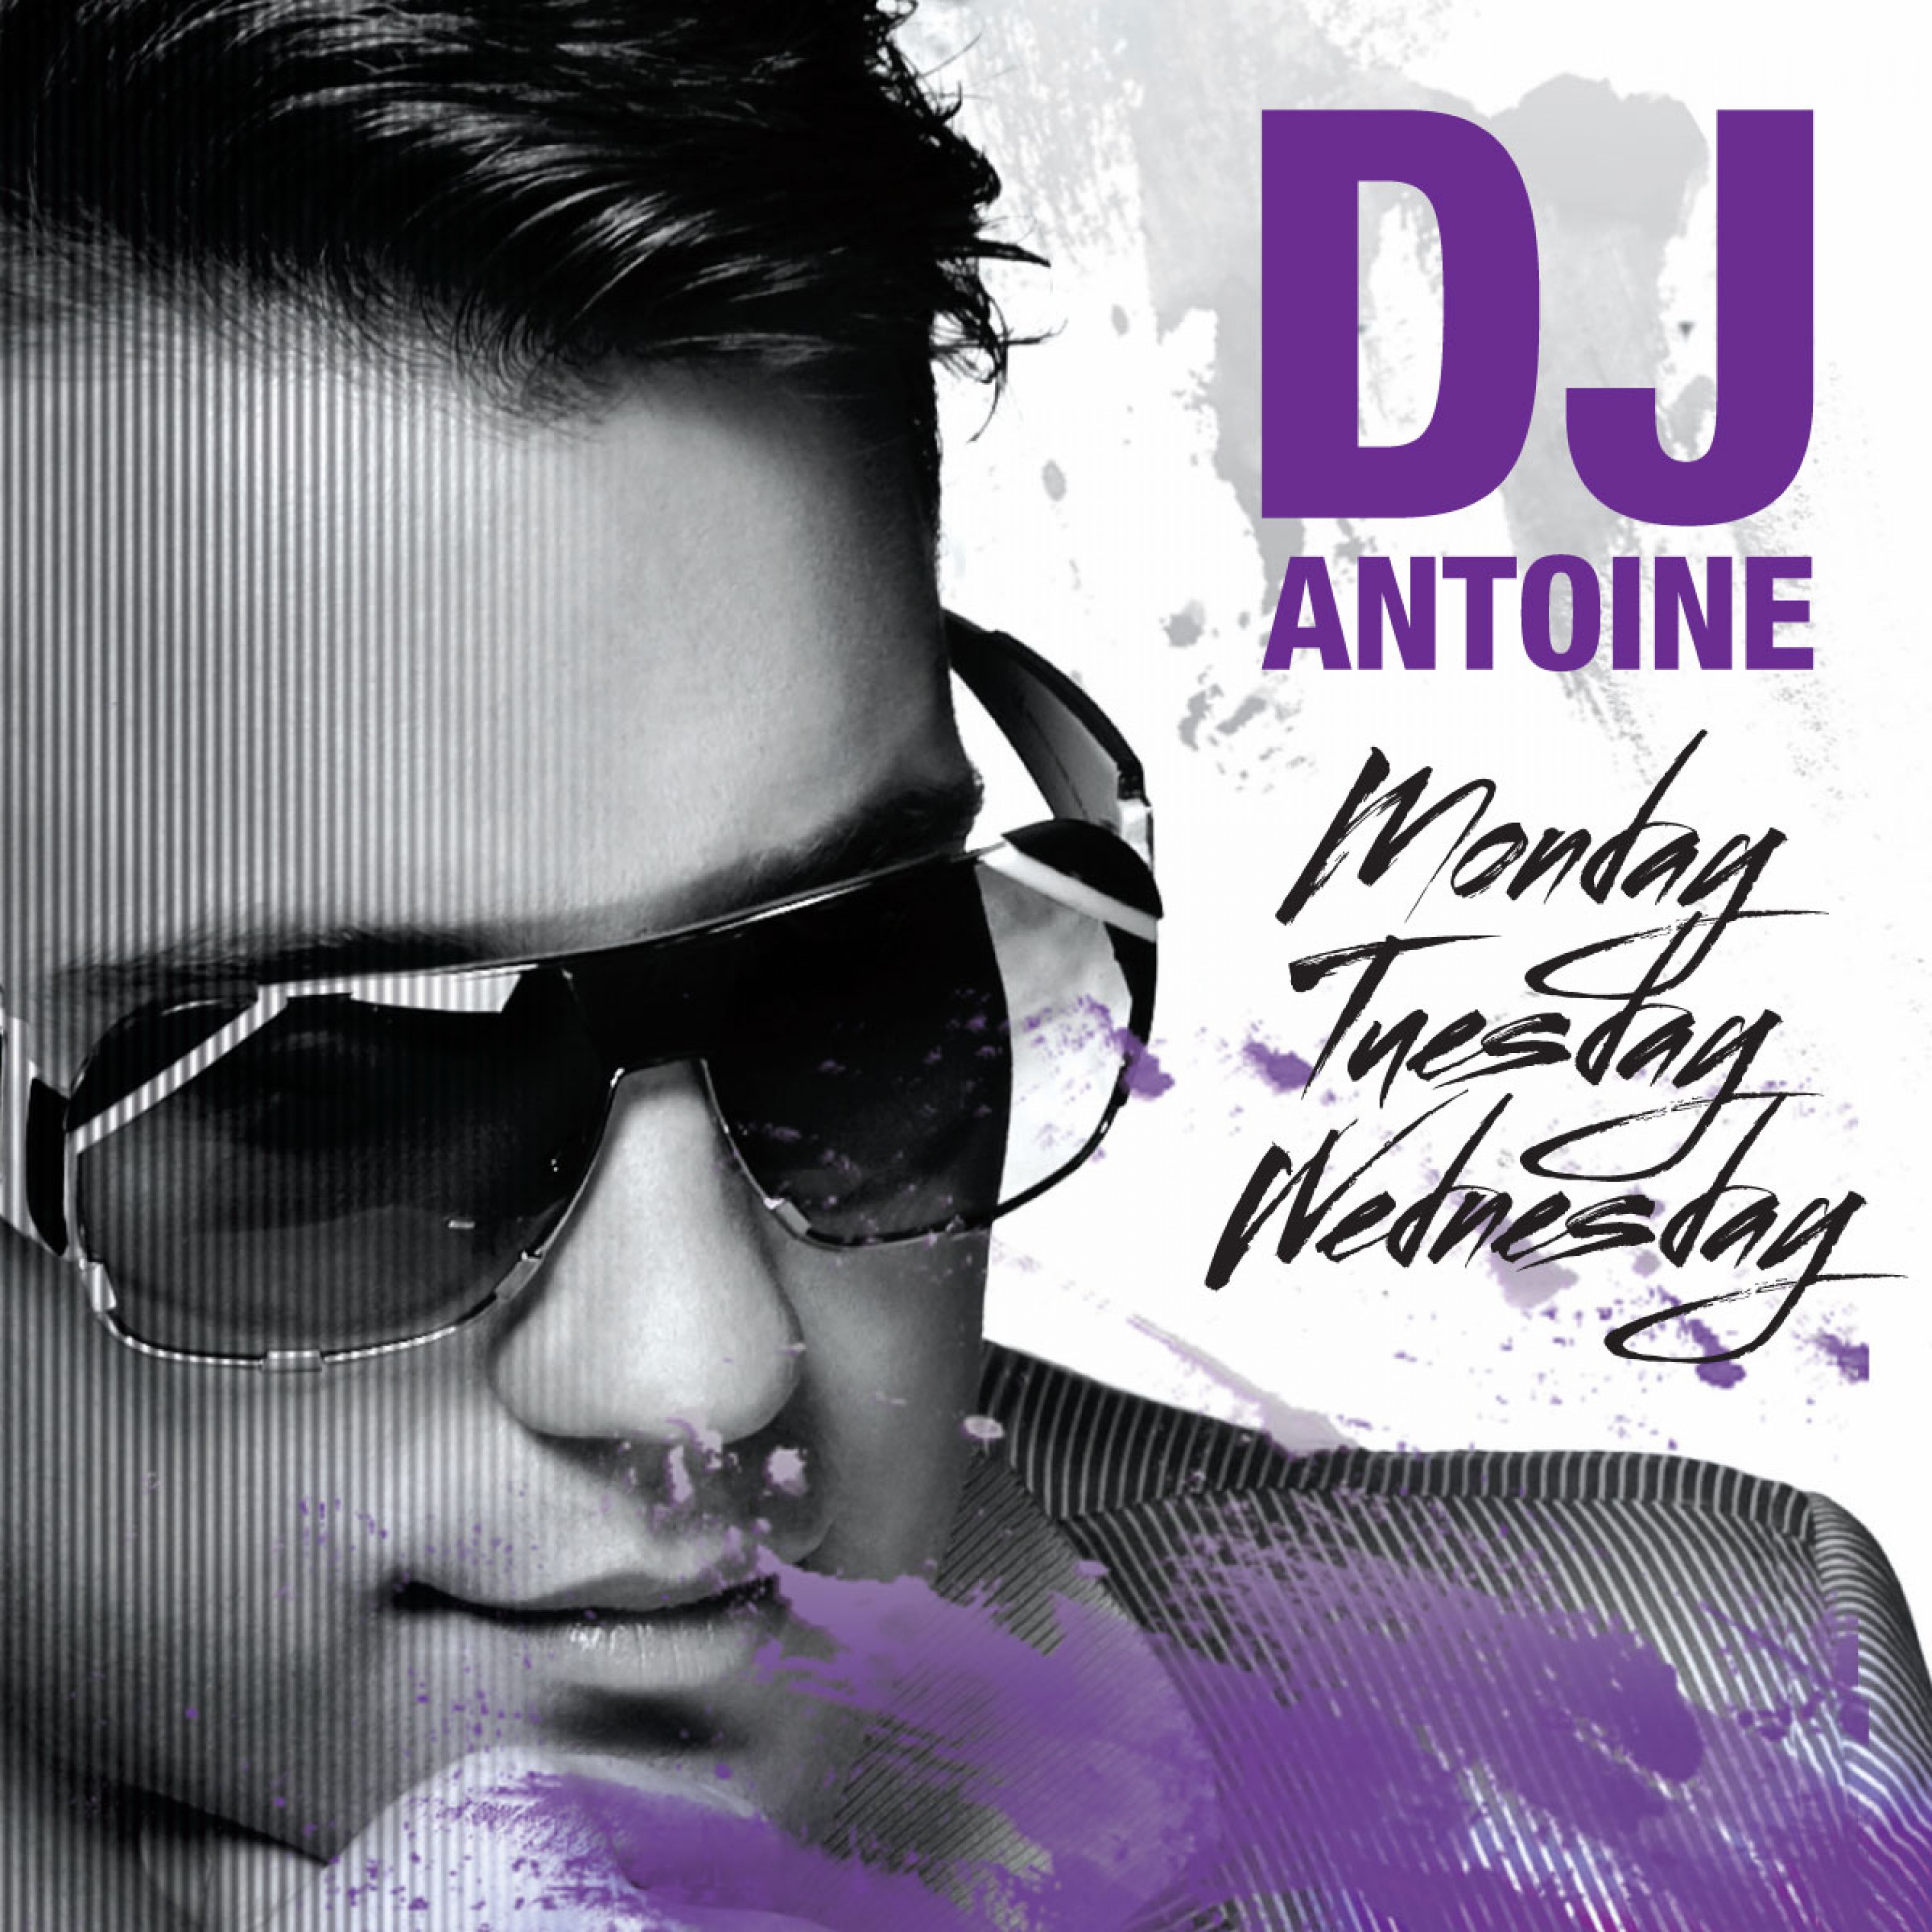 Monday, Tuesday, Wednesday (DJ Antoine vs Mad Mark Radio Edit)